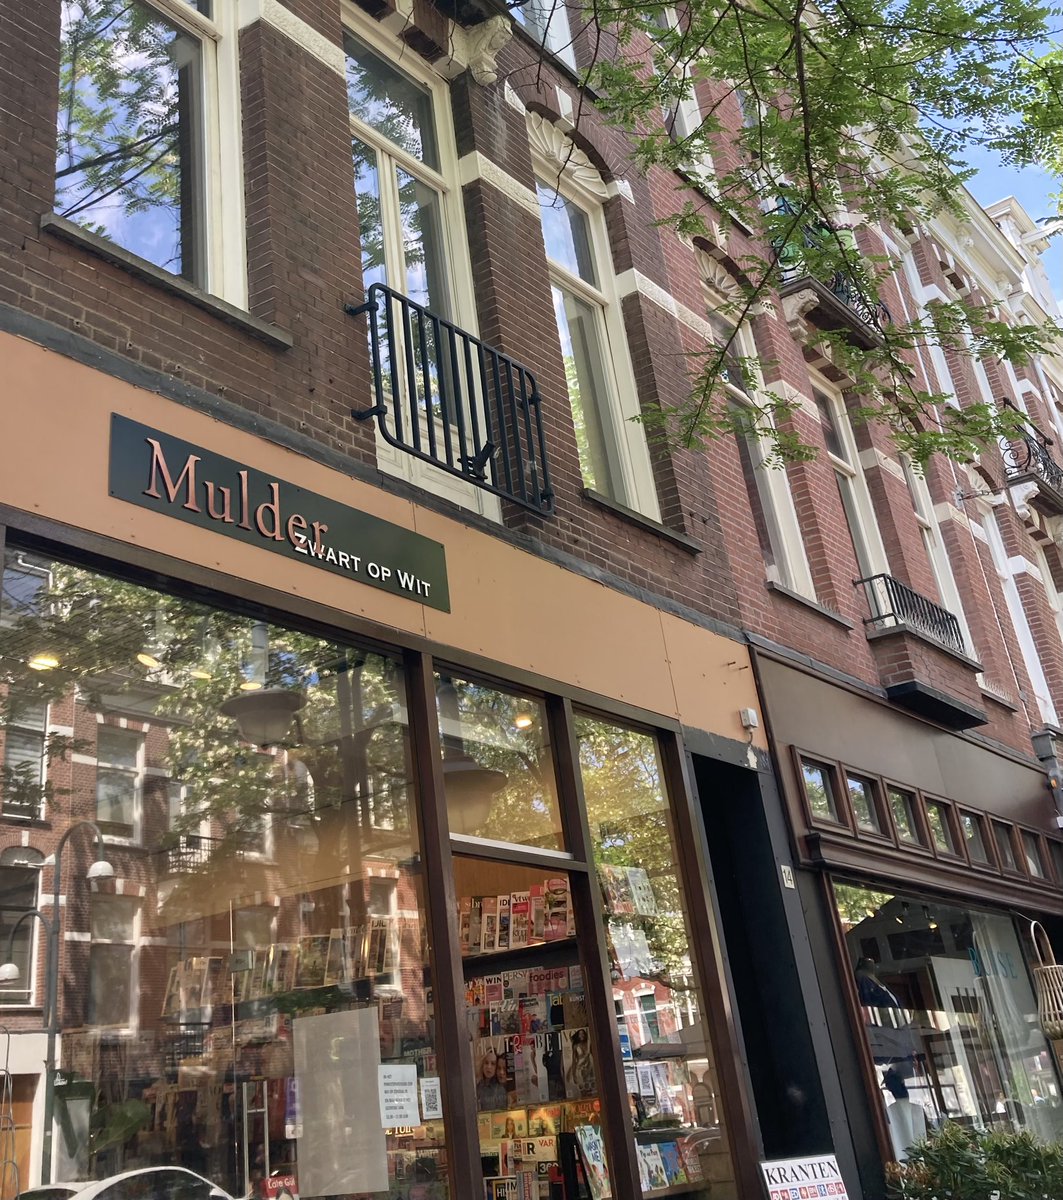 De betere boekhandel #Mulder #Amsterdam